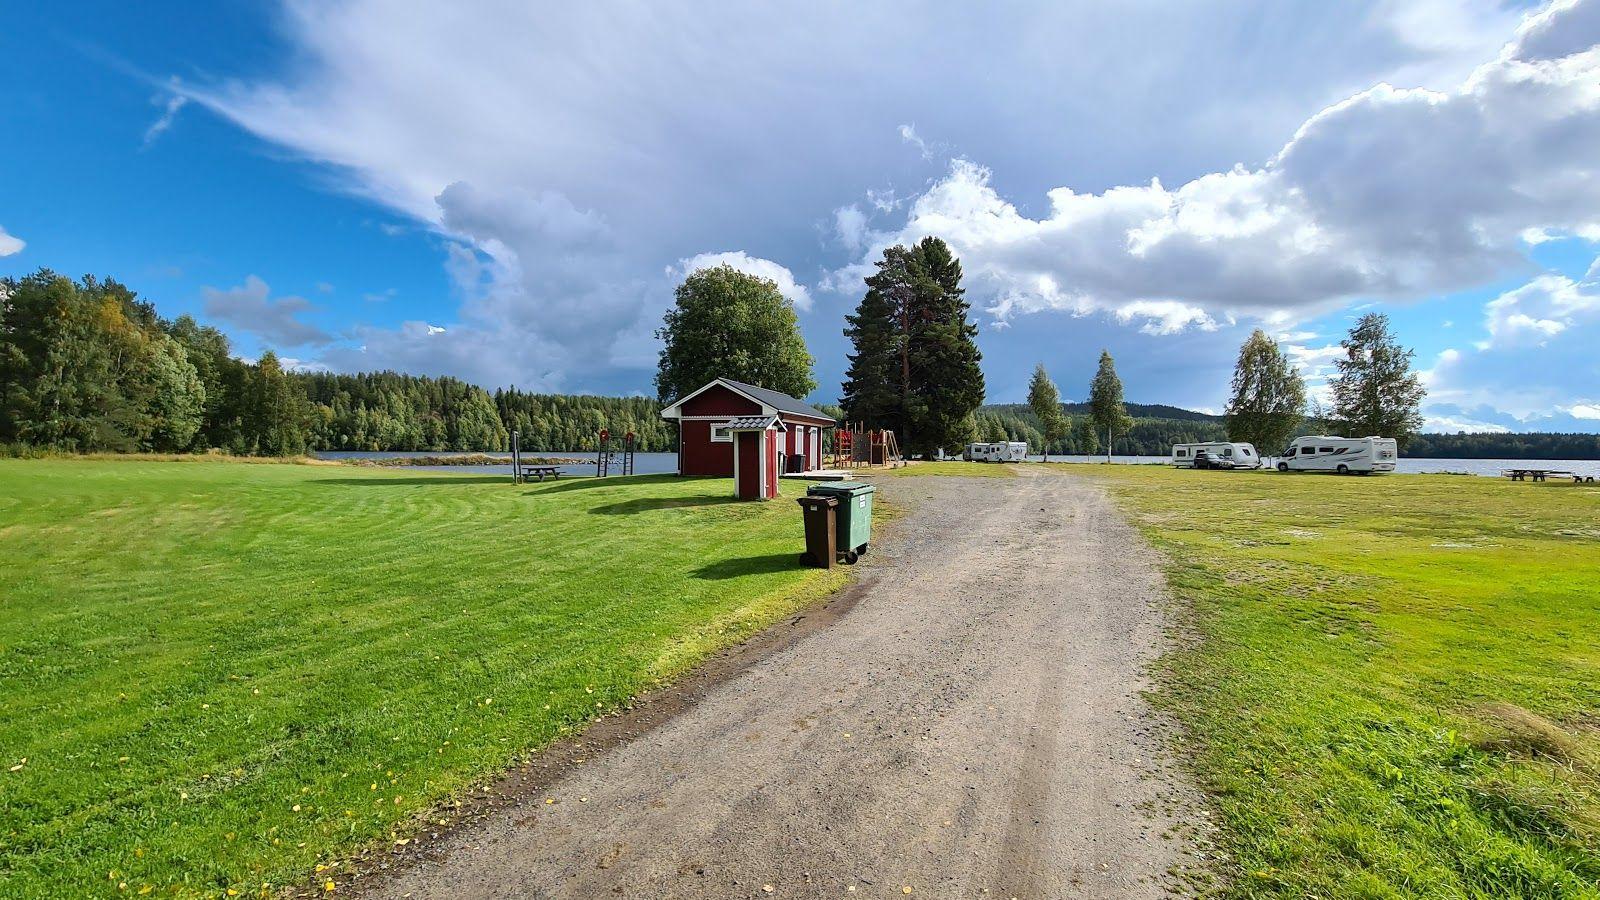 Ramsele camping, Vindeln, Sweden